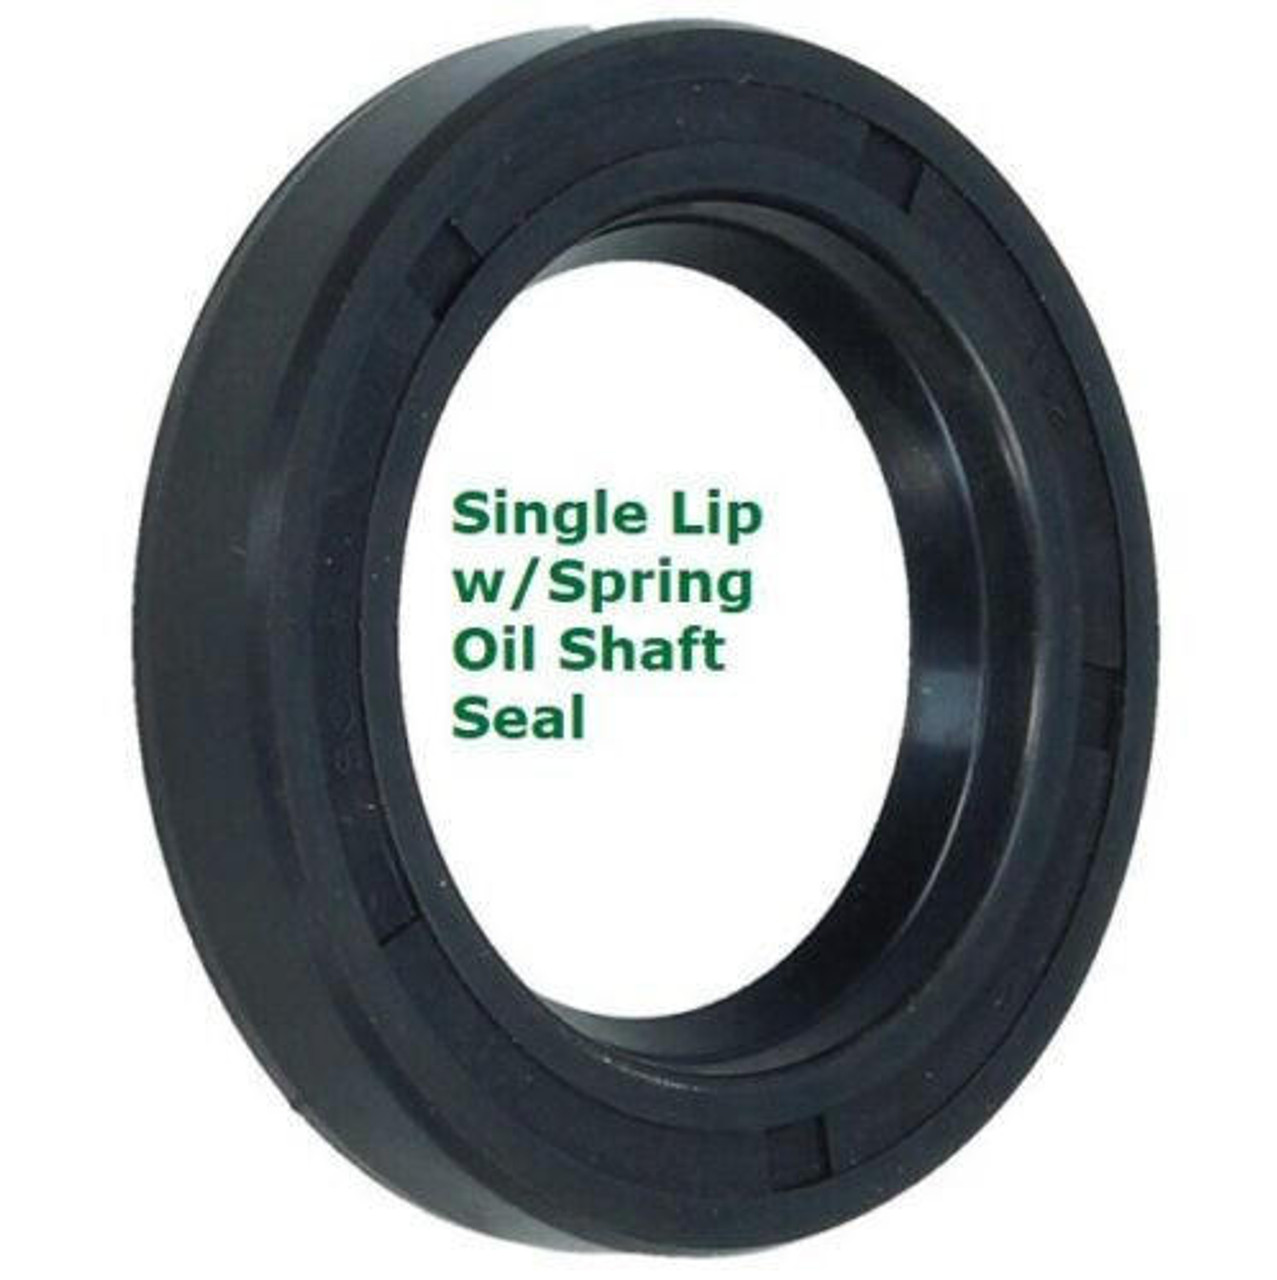 Metric Oil Shaft Seal 250 x 290 x 16mm   Single Lip   Price for 1 pc